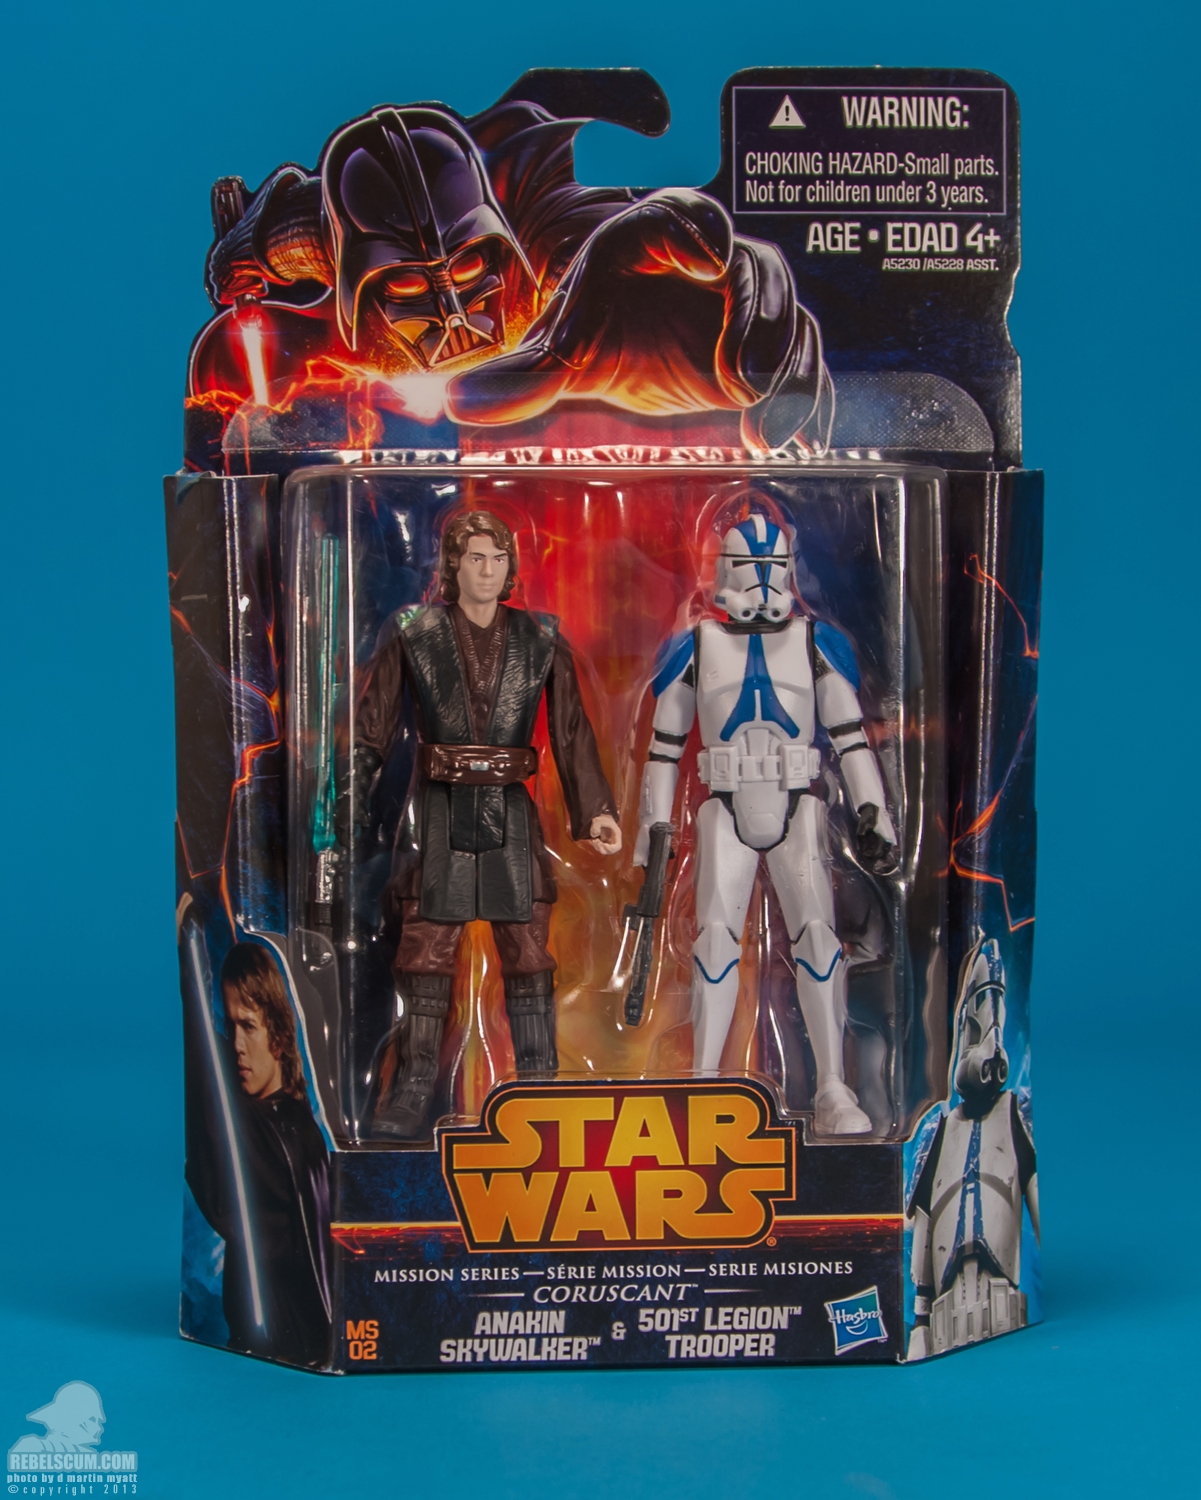 Anakin-Skywalker-501st-Trooper-Mission-Series-Coruscant-029.jpg